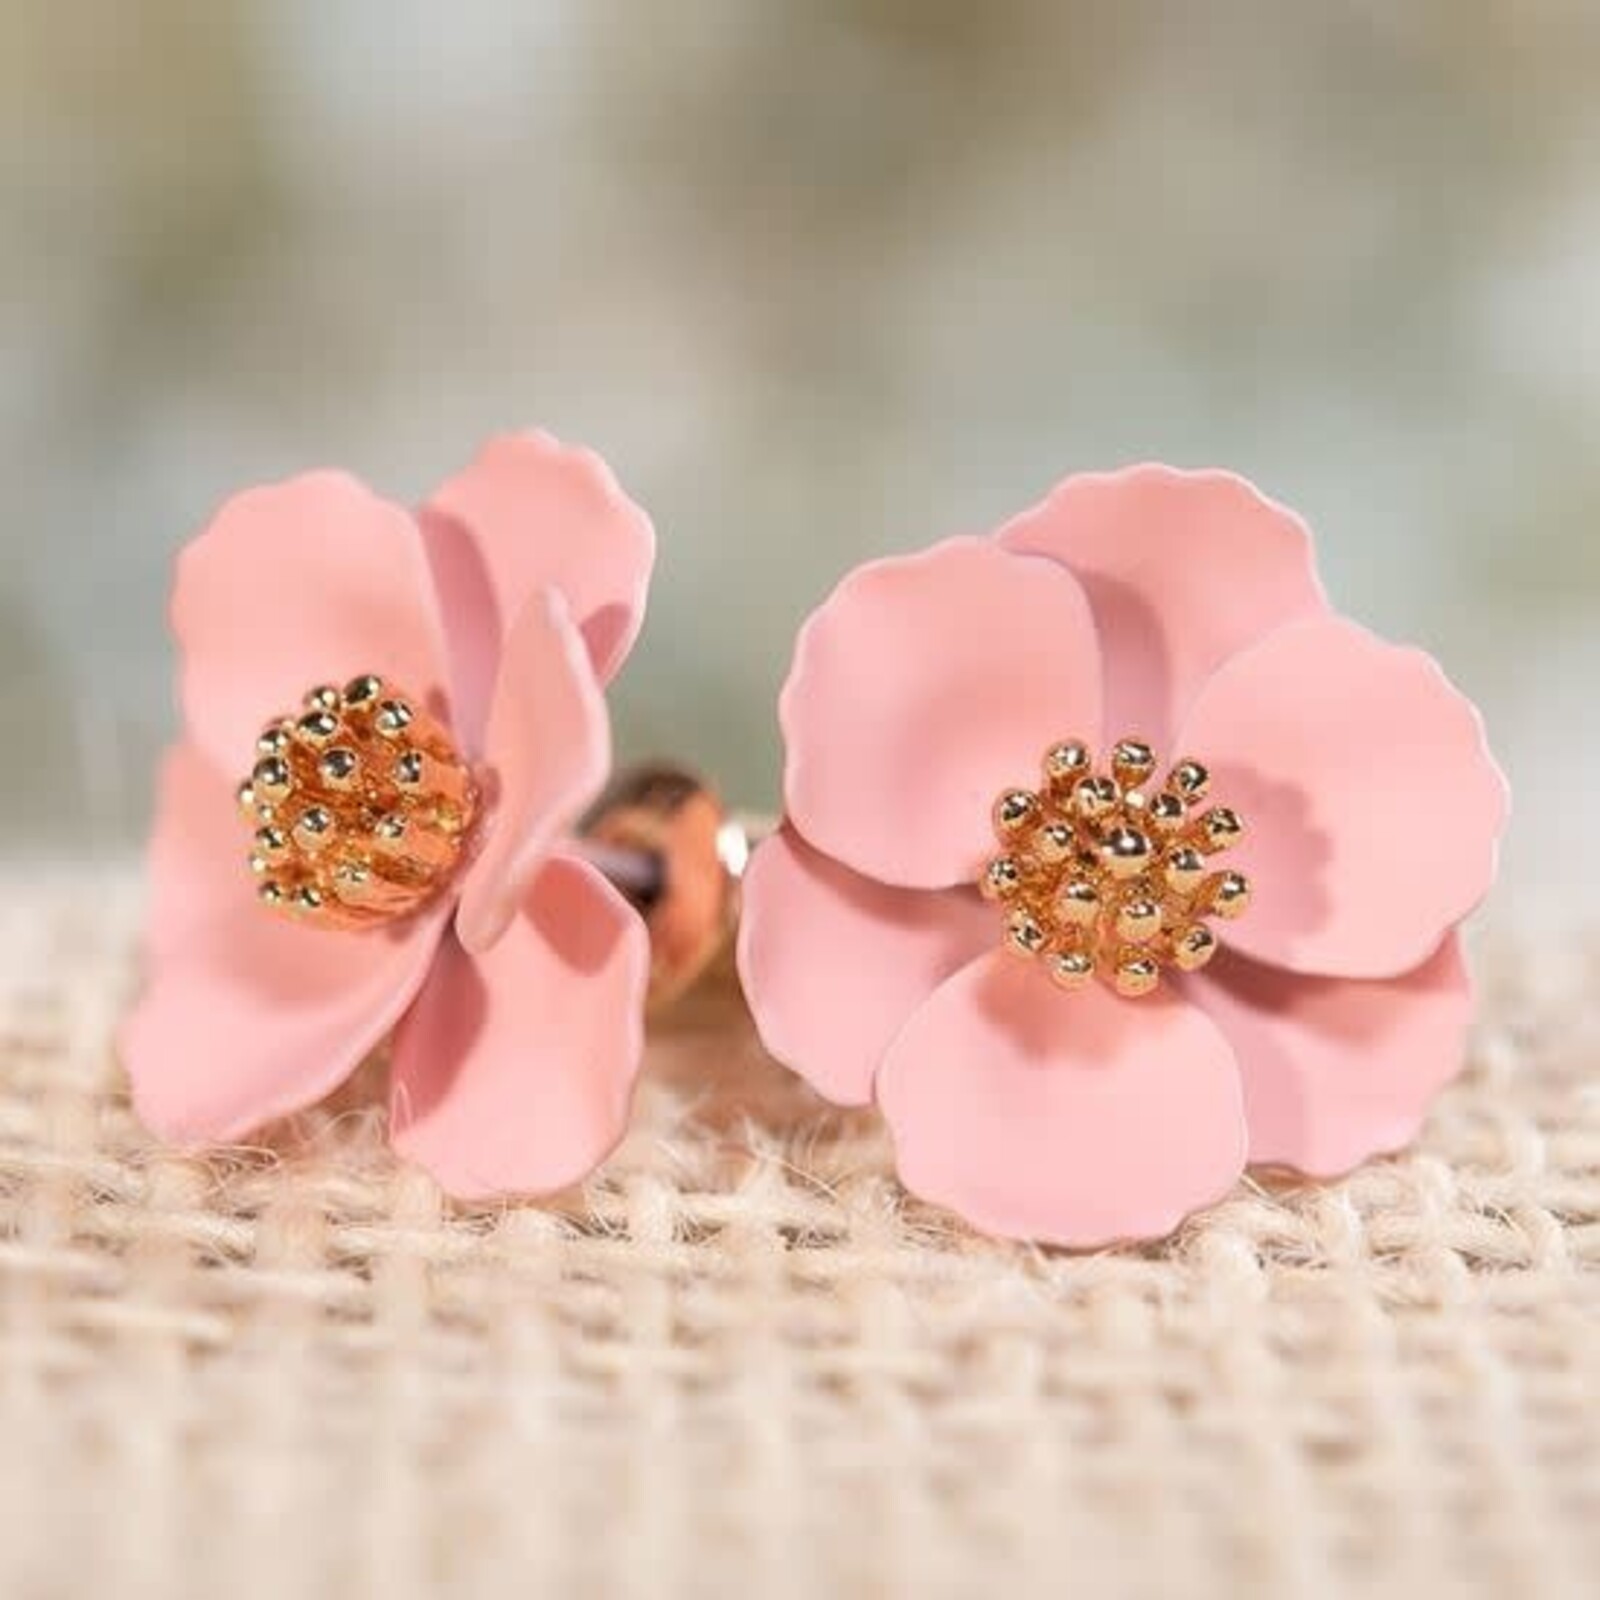 Amanda Blu Blu Botanicals Small Flower Earring loading=